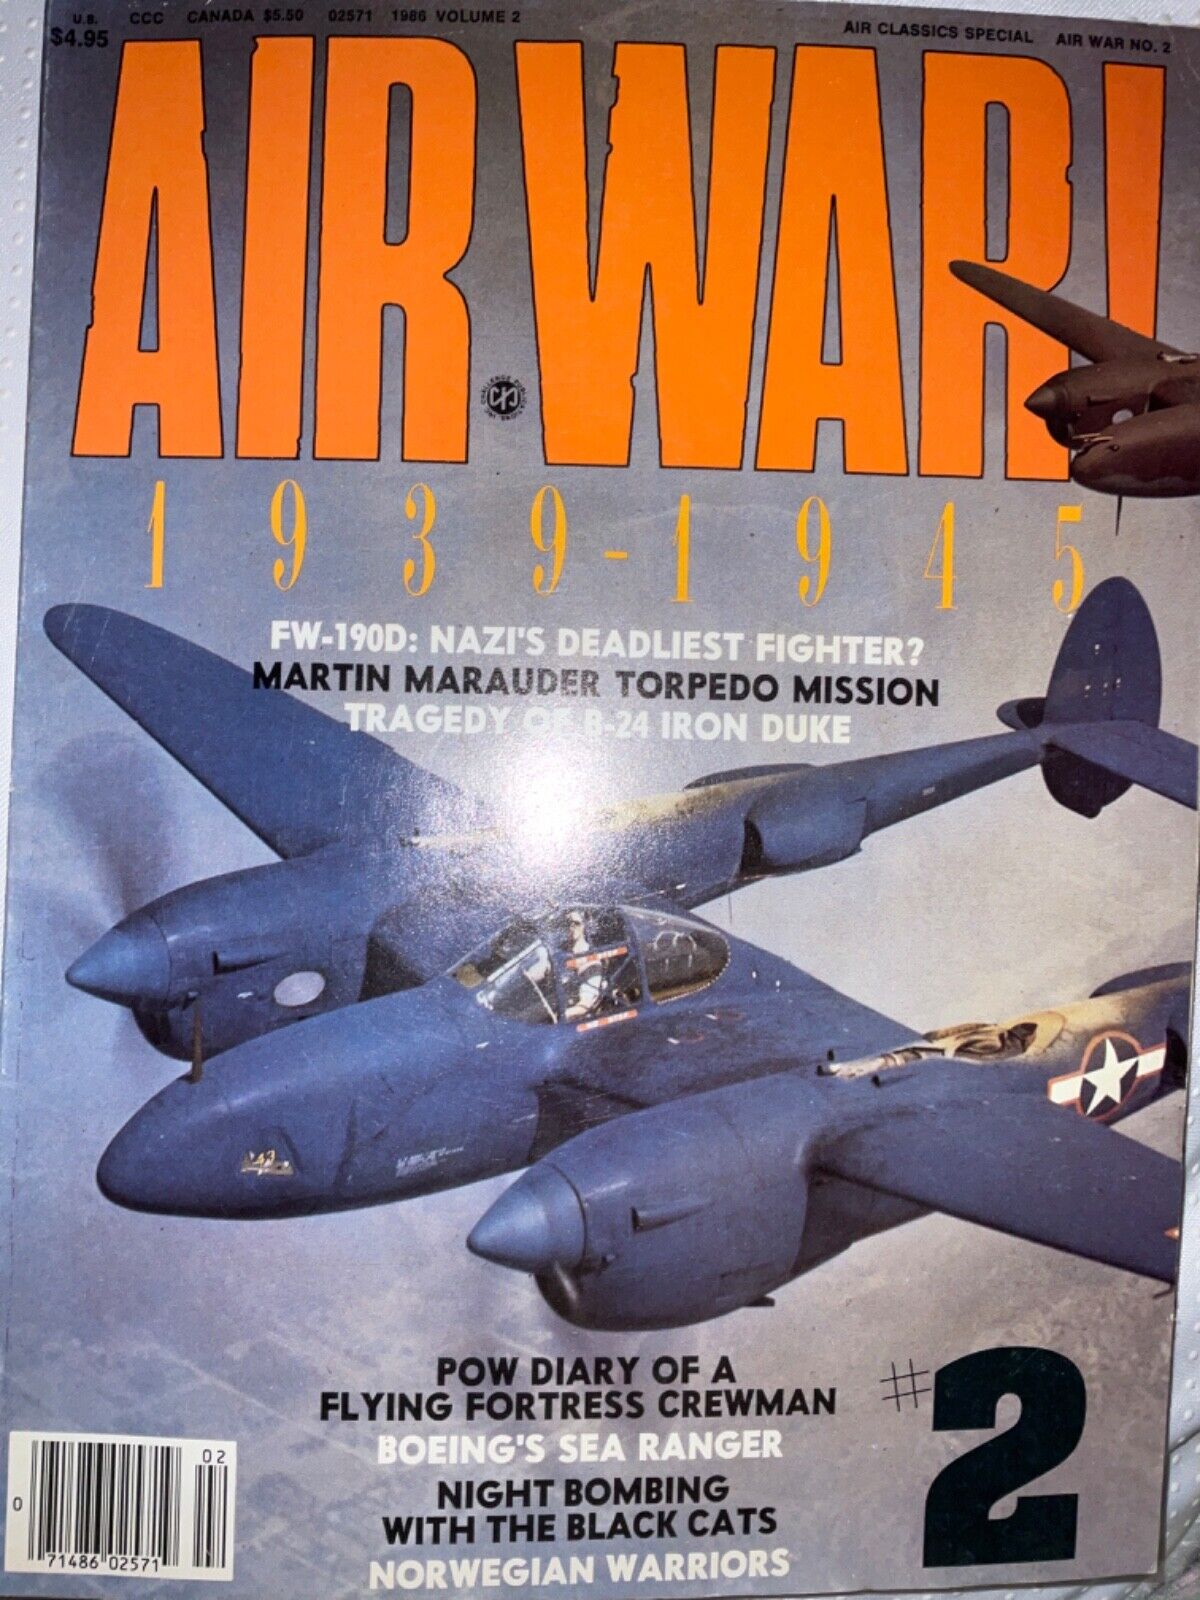 Vtg Air War 1939-1945 Softcover Book/magazine Air Classics Special Vol 2 1986